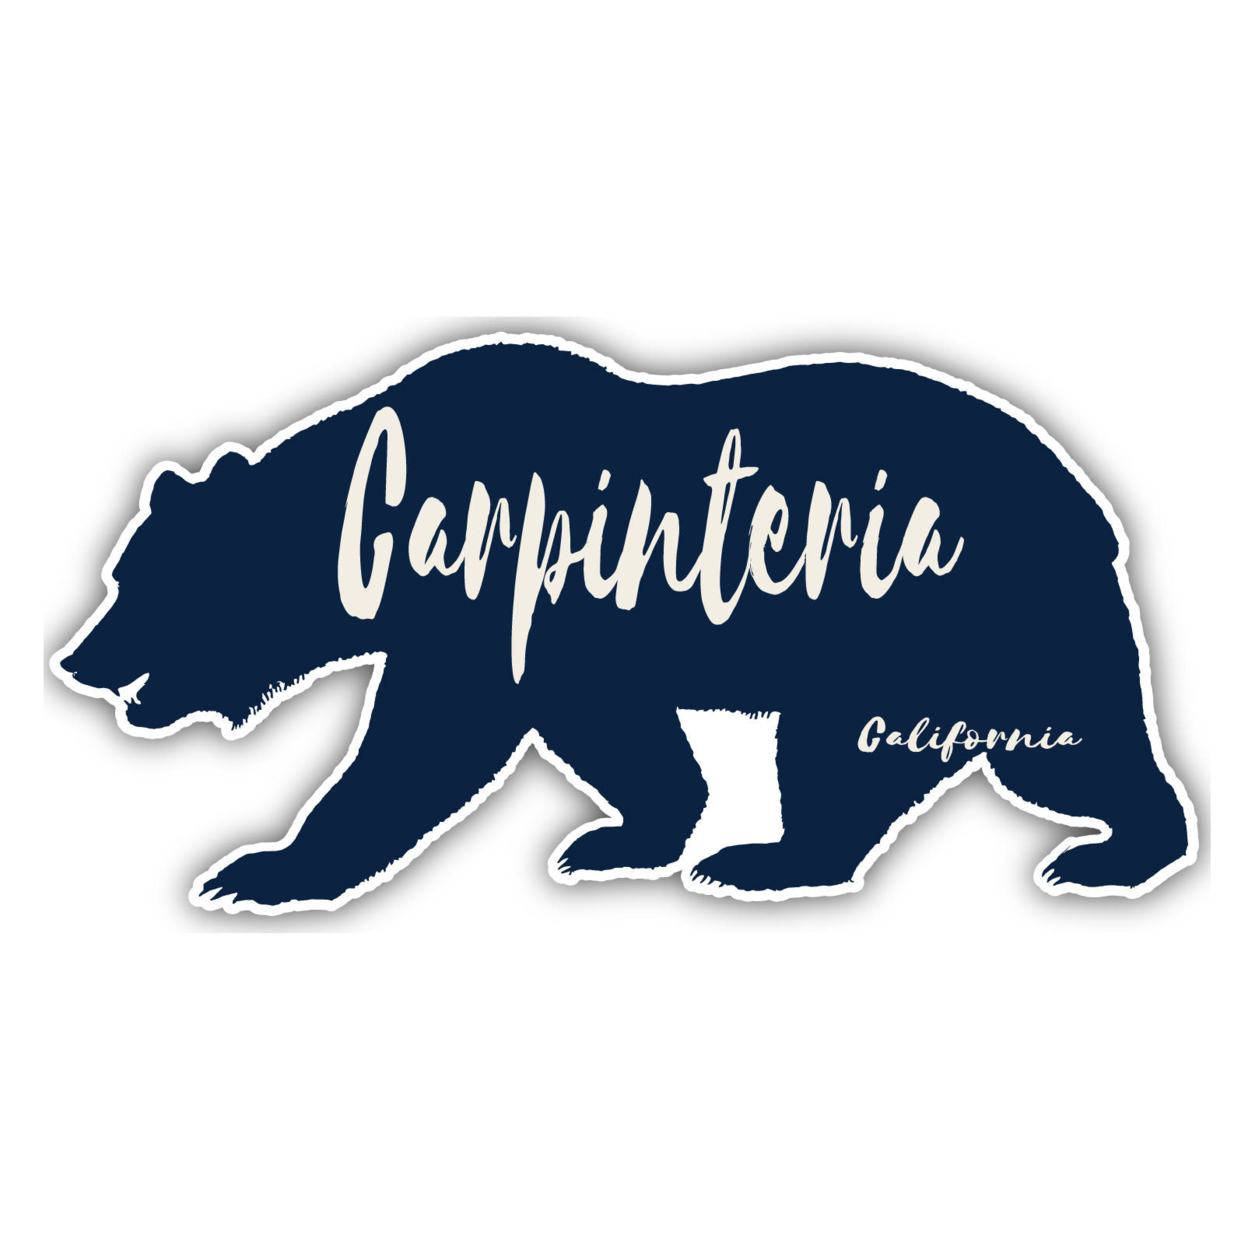 Carpinteria California Souvenir Decorative Stickers (Choose Theme And Size) - Single Unit, 4-Inch, Bear